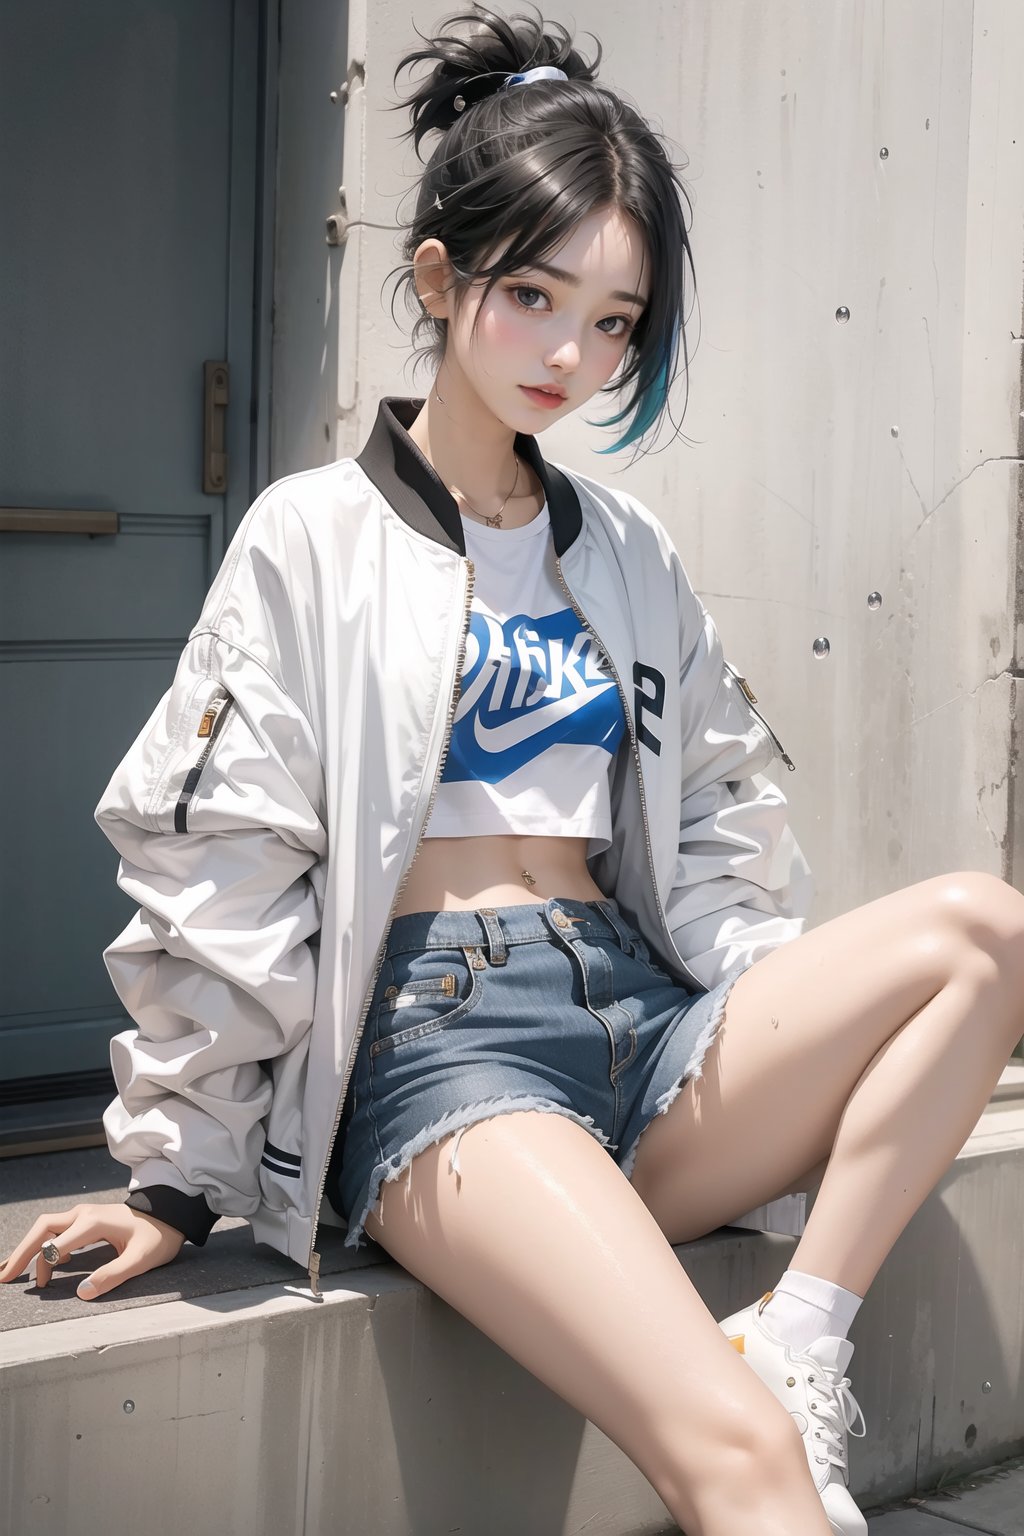 korea girl 22 year old, tangaline light sleek pixie shorts hair style, wearing tangaline jacket bomber m1, shorts bluejeans, white sneaker, splash drop color